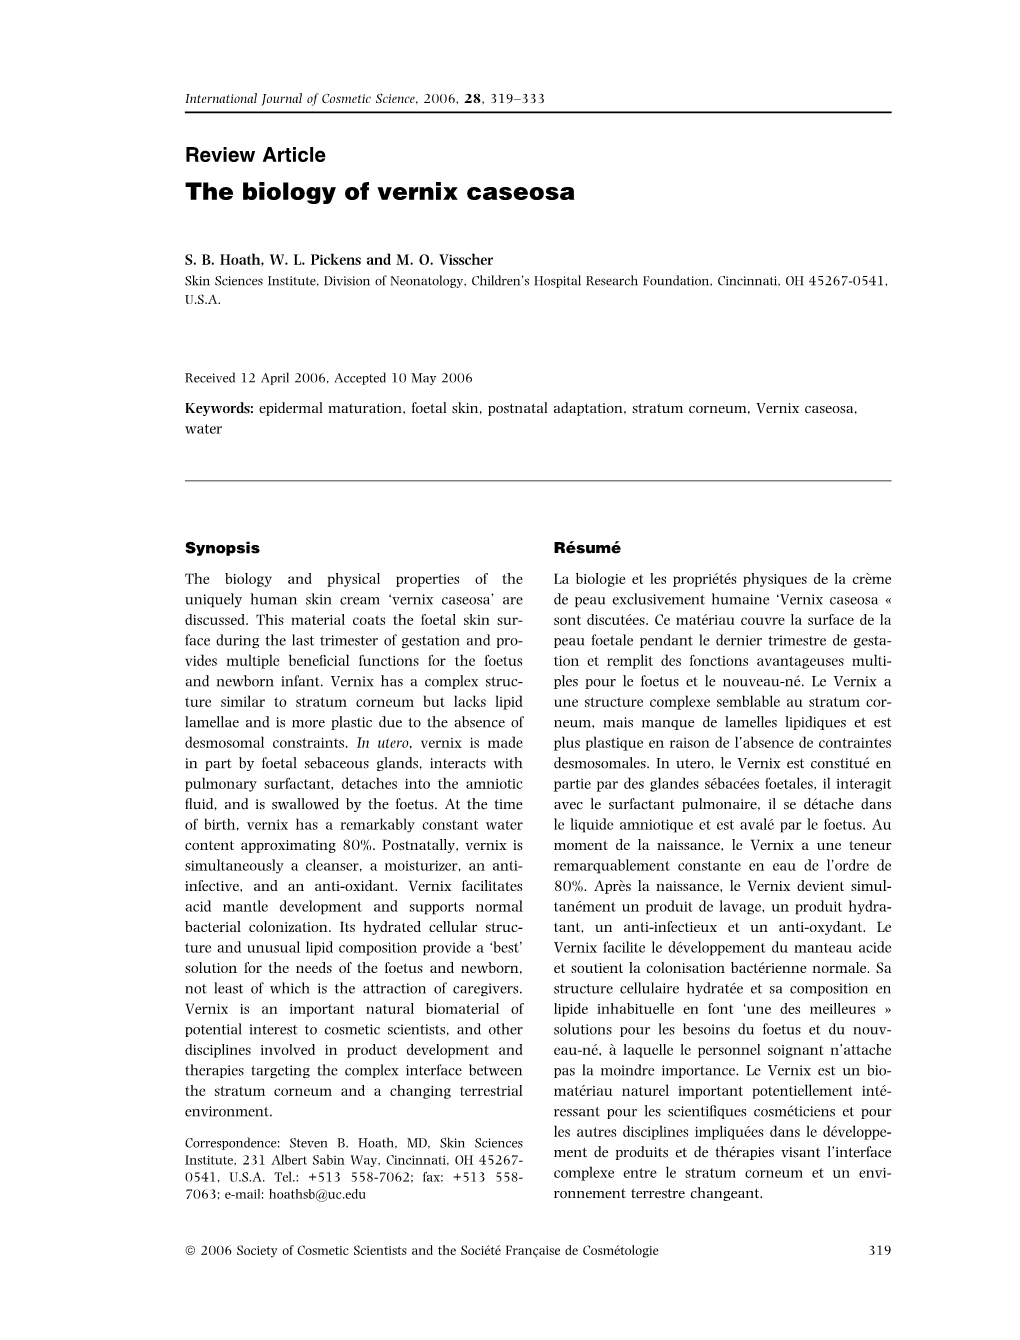 The Biology of Vernix Caseosa